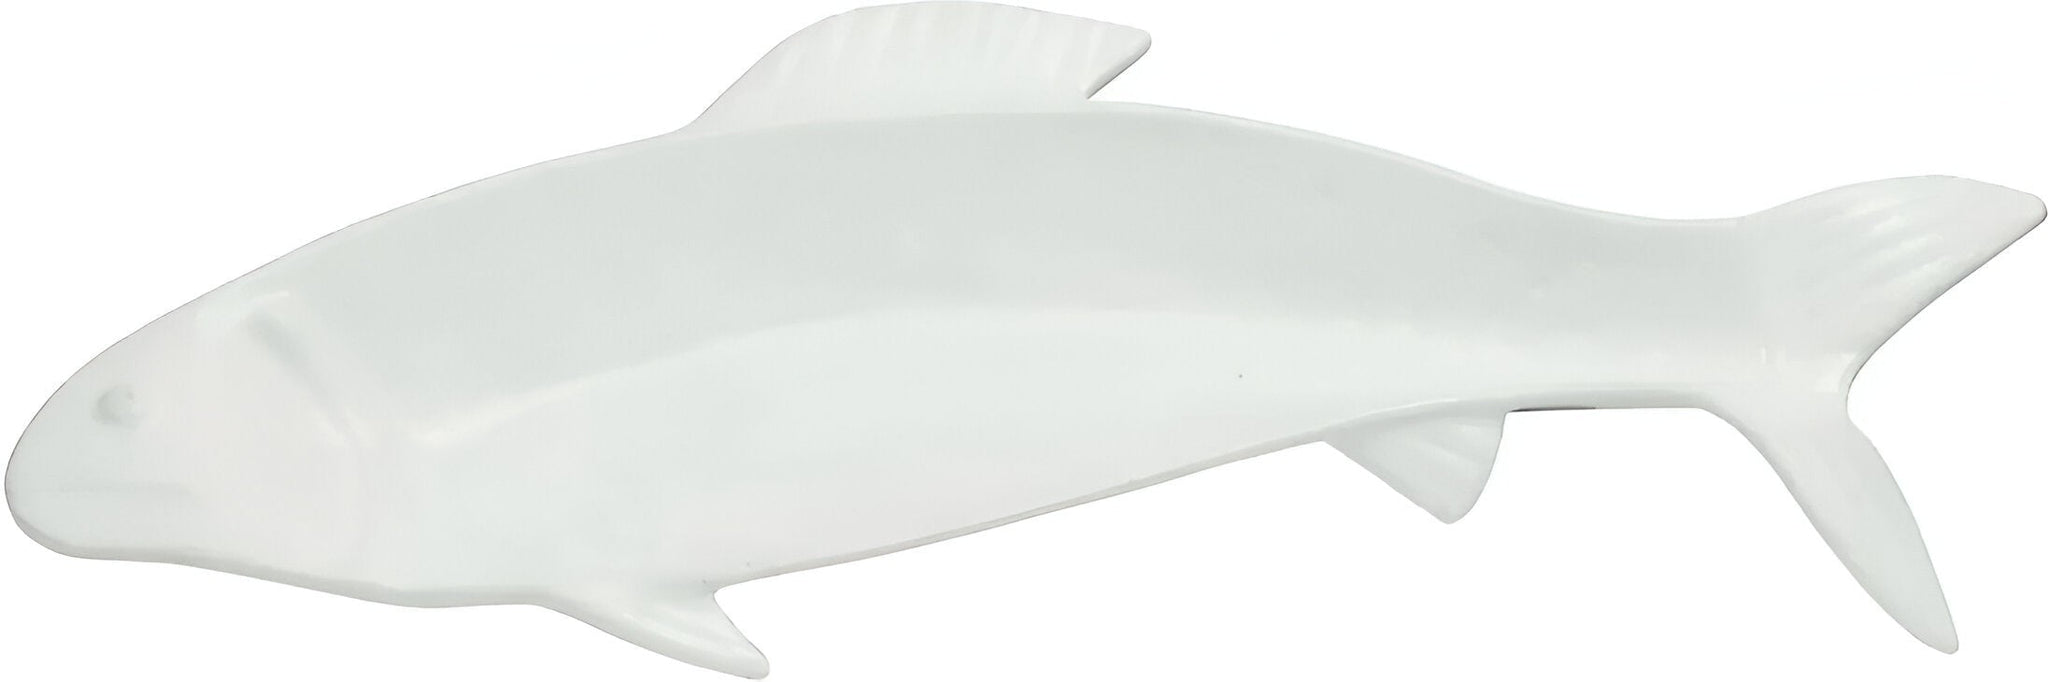 Bugambilia - Mod 8.45 Oz Large White Fish Platter With Glossy Smooth Finish - PHT05-MOD-WW